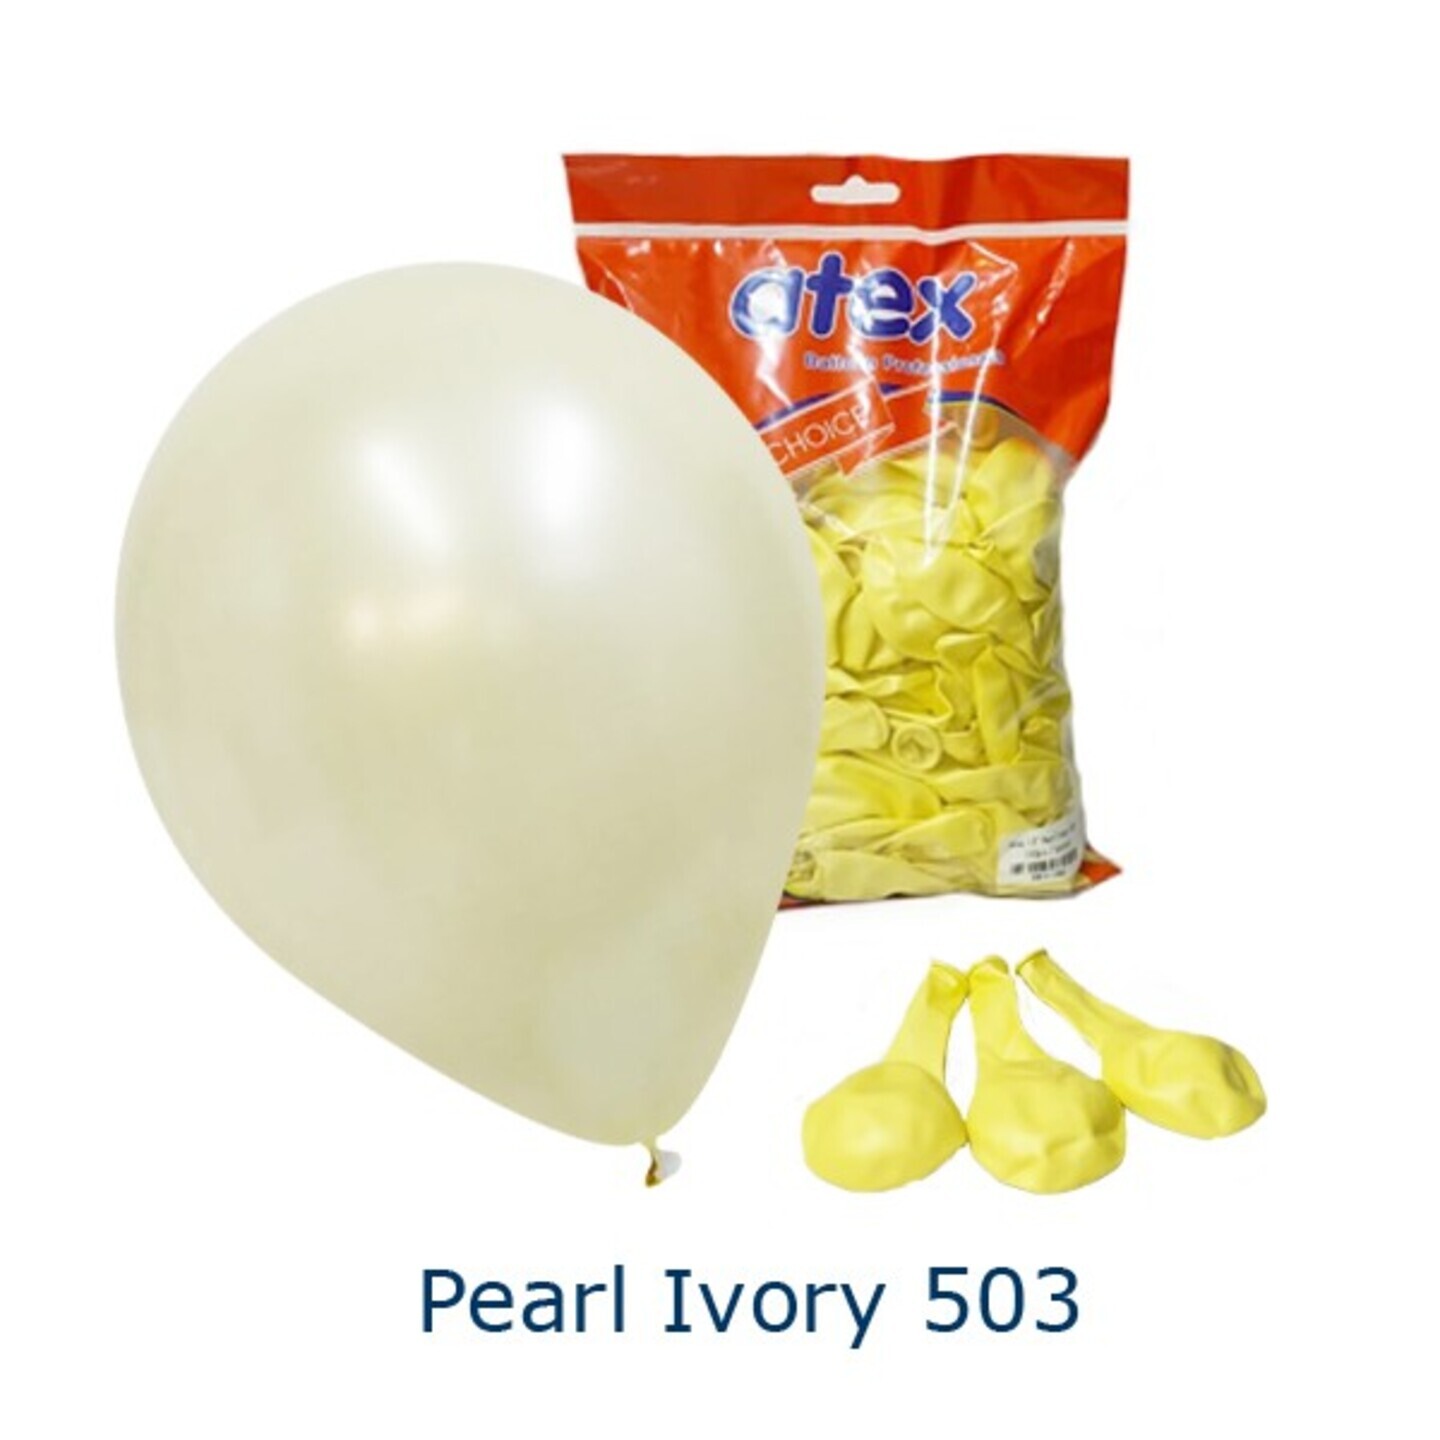 Pearl Ivory 503